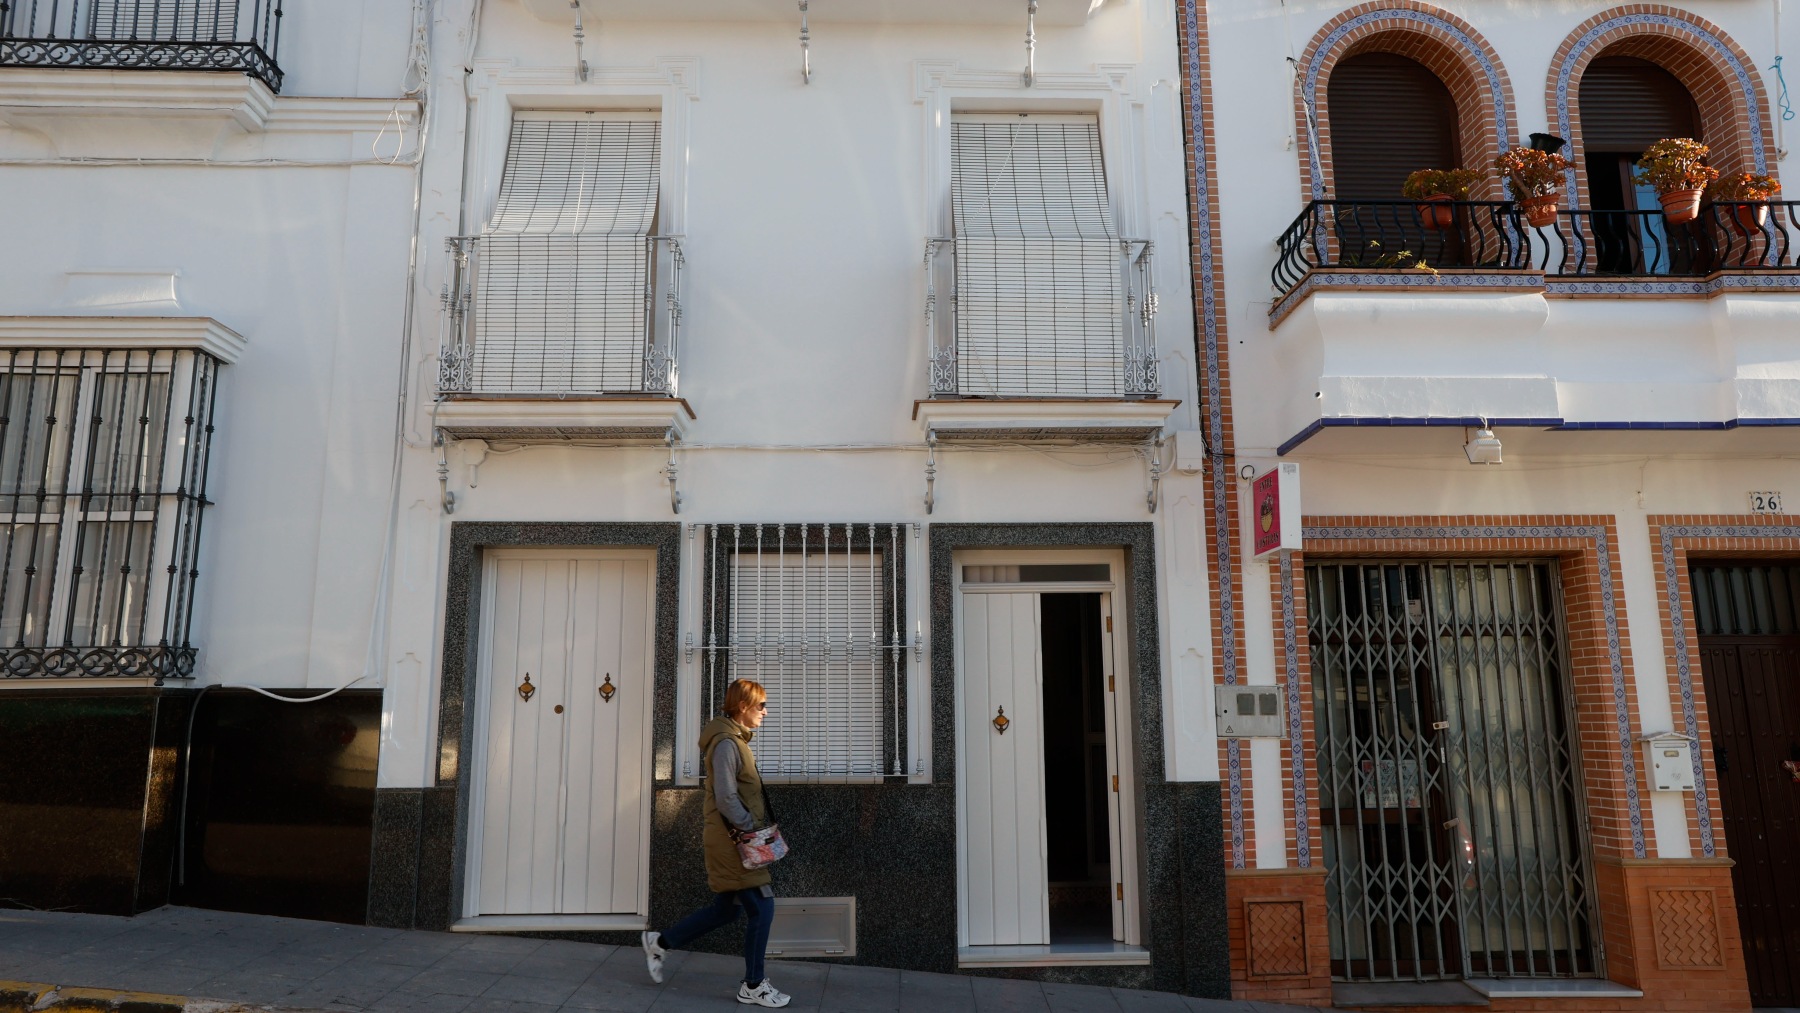 Vivienda de Montellano (Sevilla) donde ha sido detenido el menor sirio (Foto: Efe)